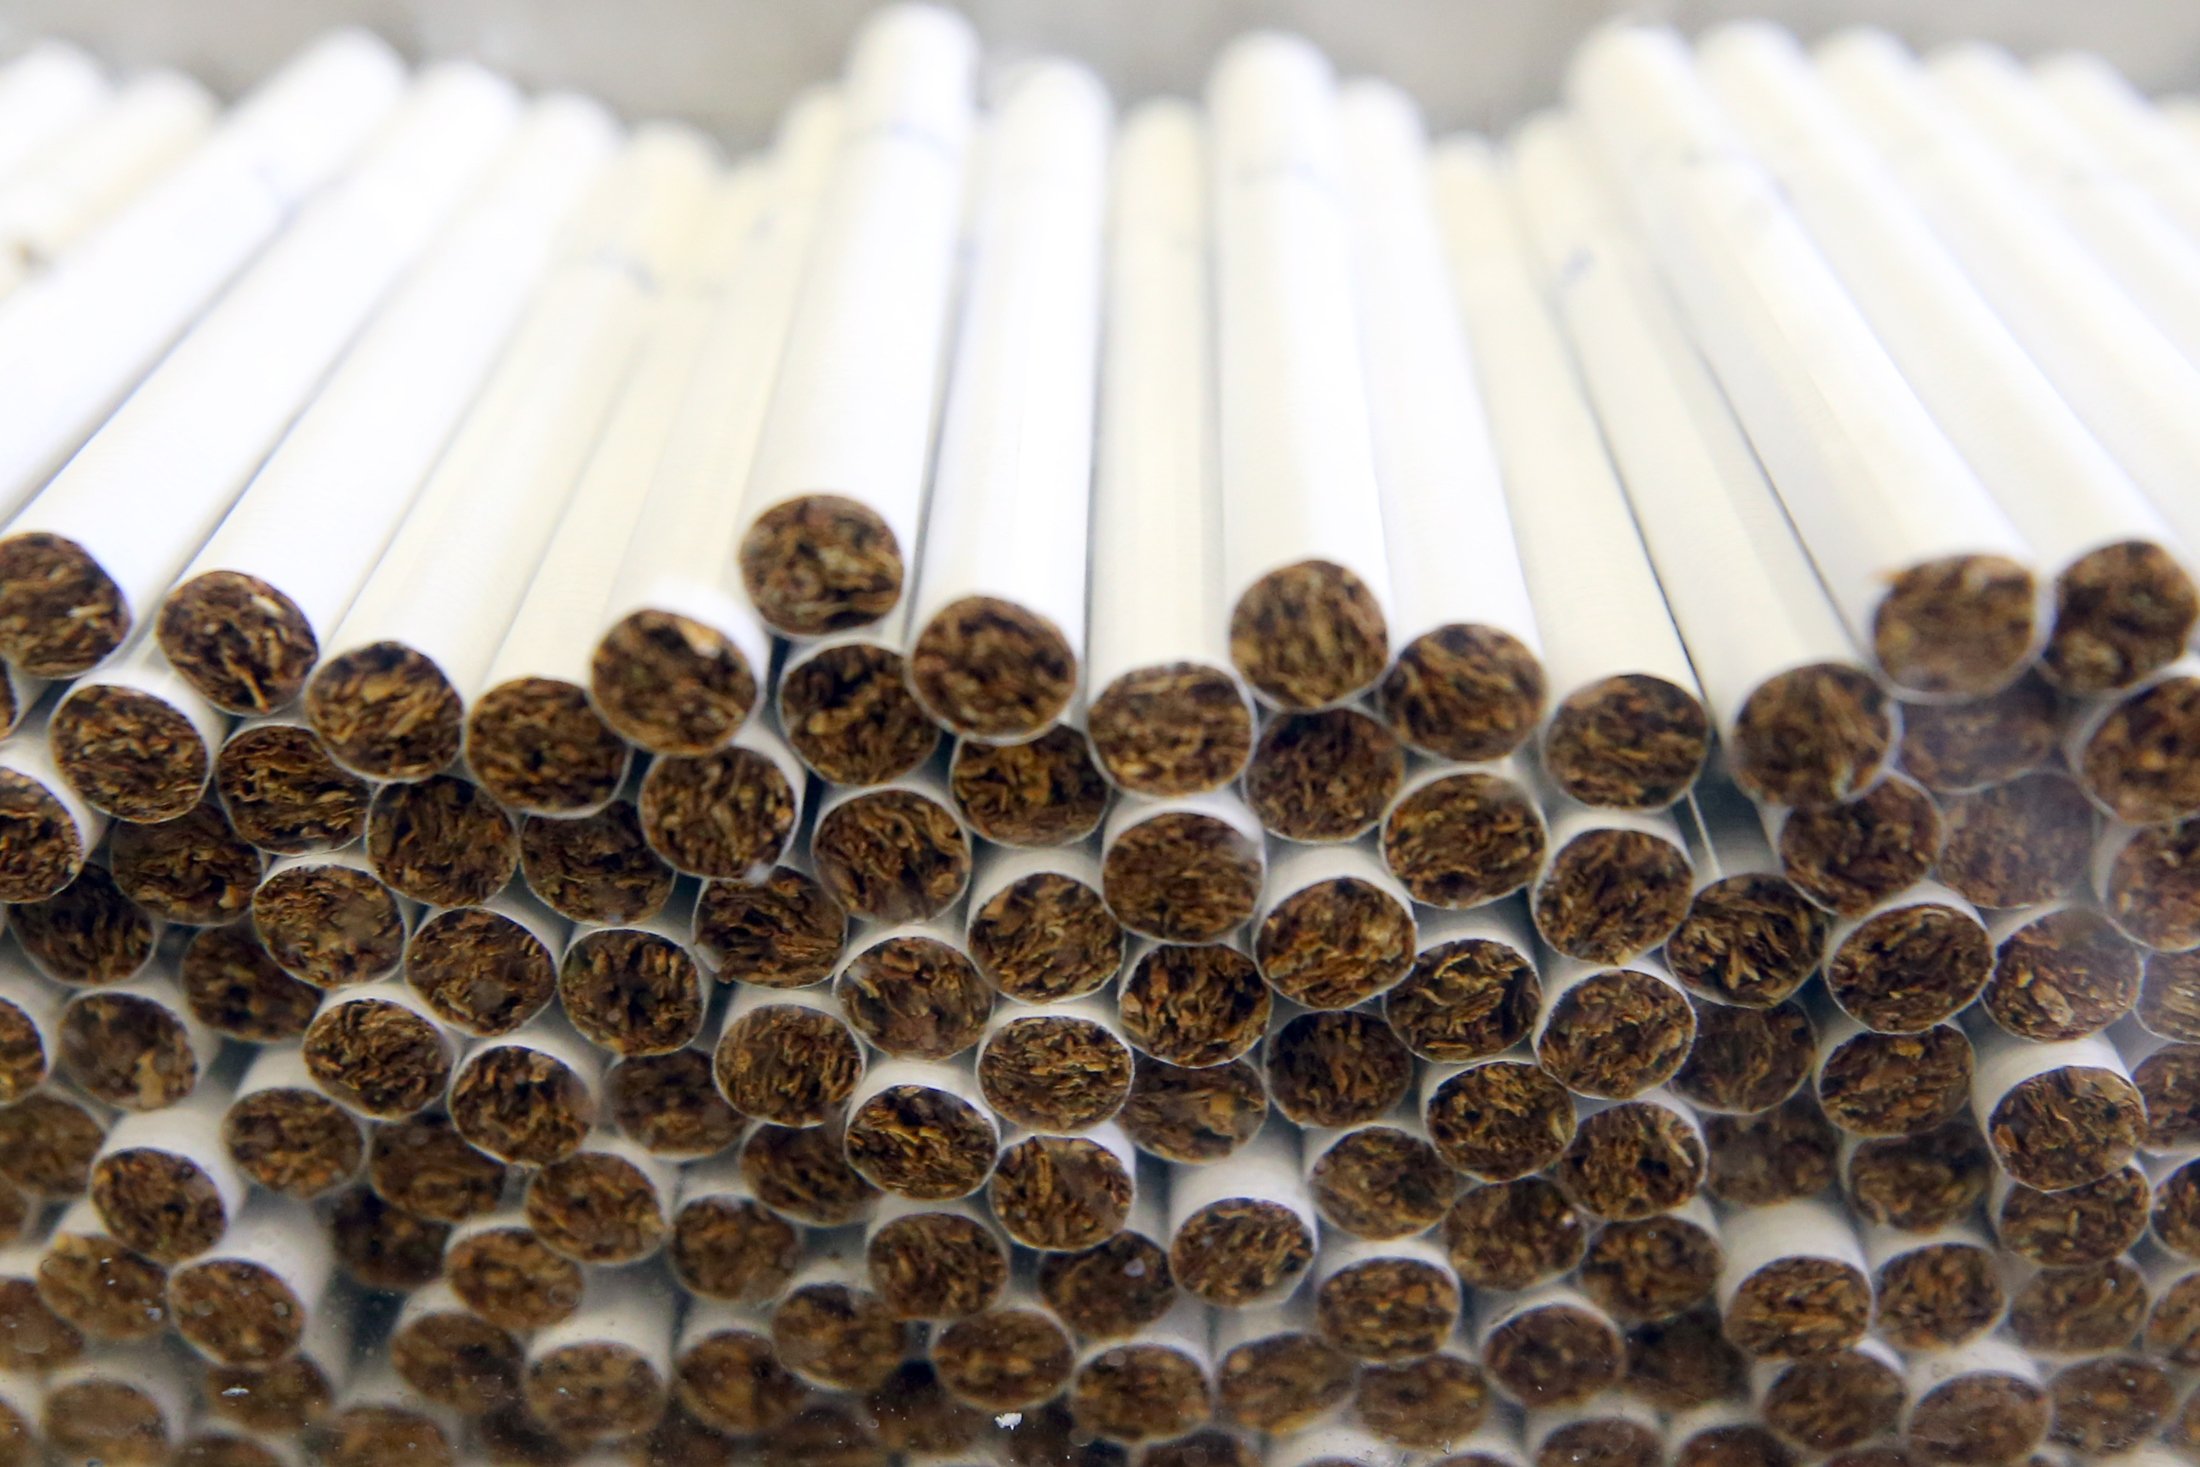 Промпроизводство сигарет падает из-за роста контрафакта – фото